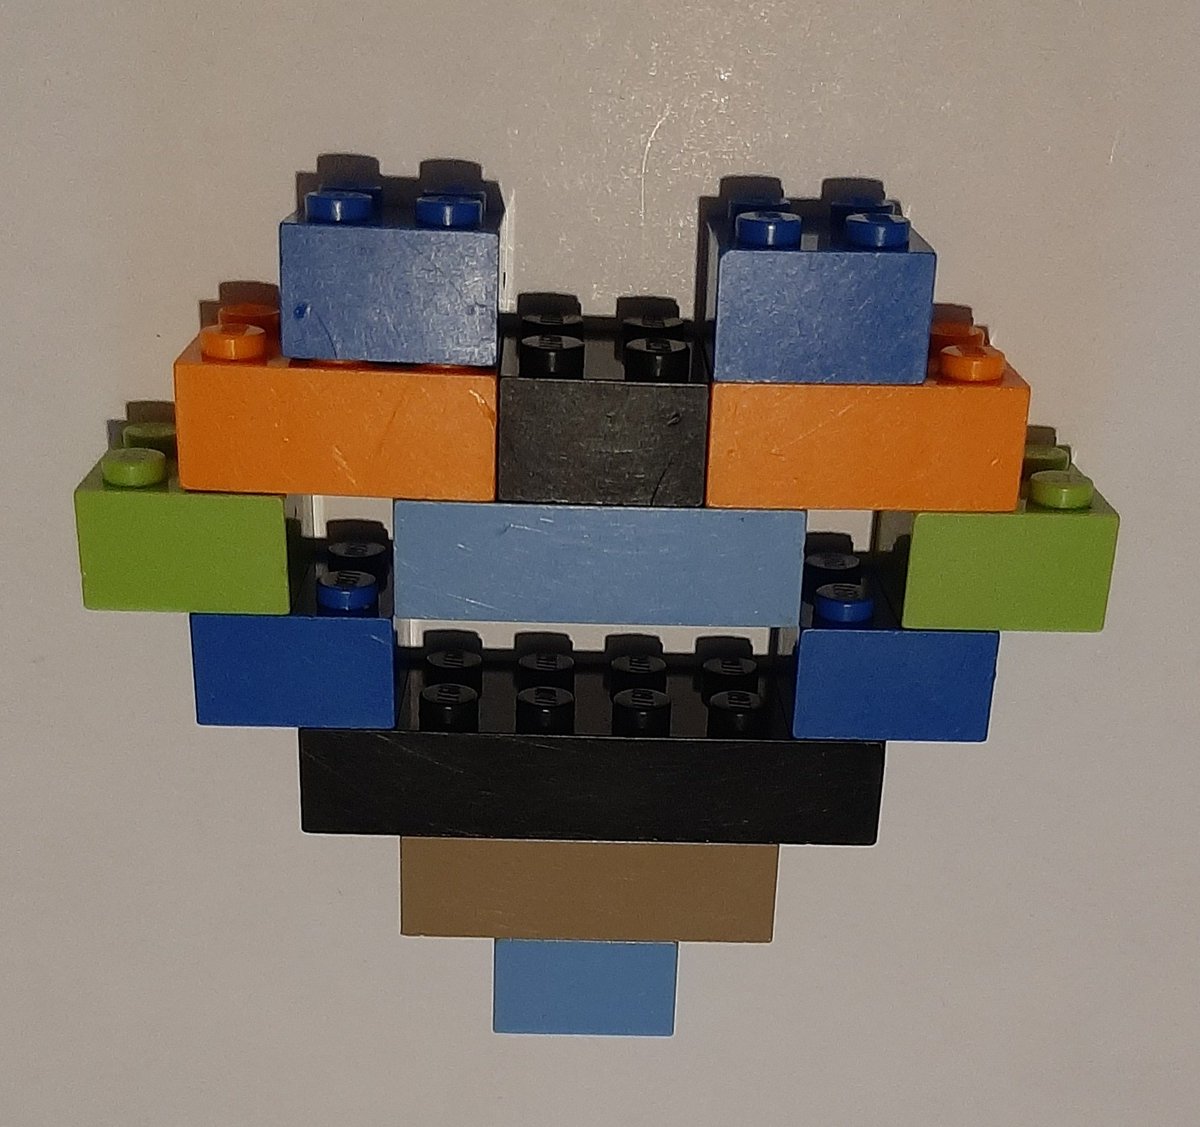 #BuildToGive
#KeremBürsin 
#LEGO